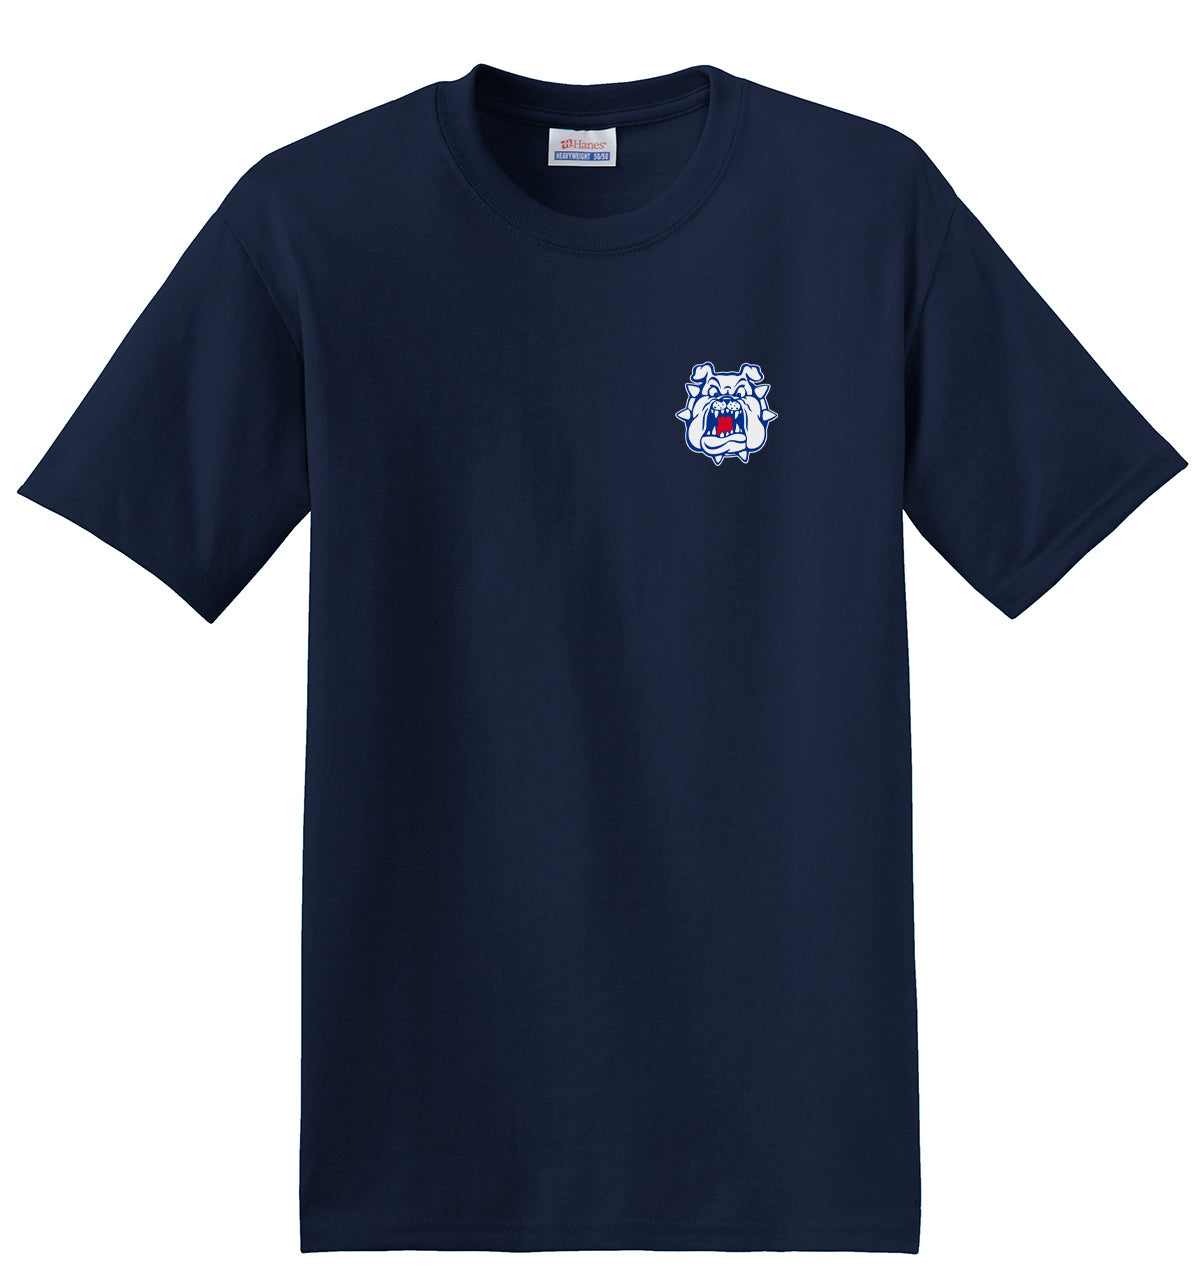 Michigan Bulldogs Baseball T-Shirt